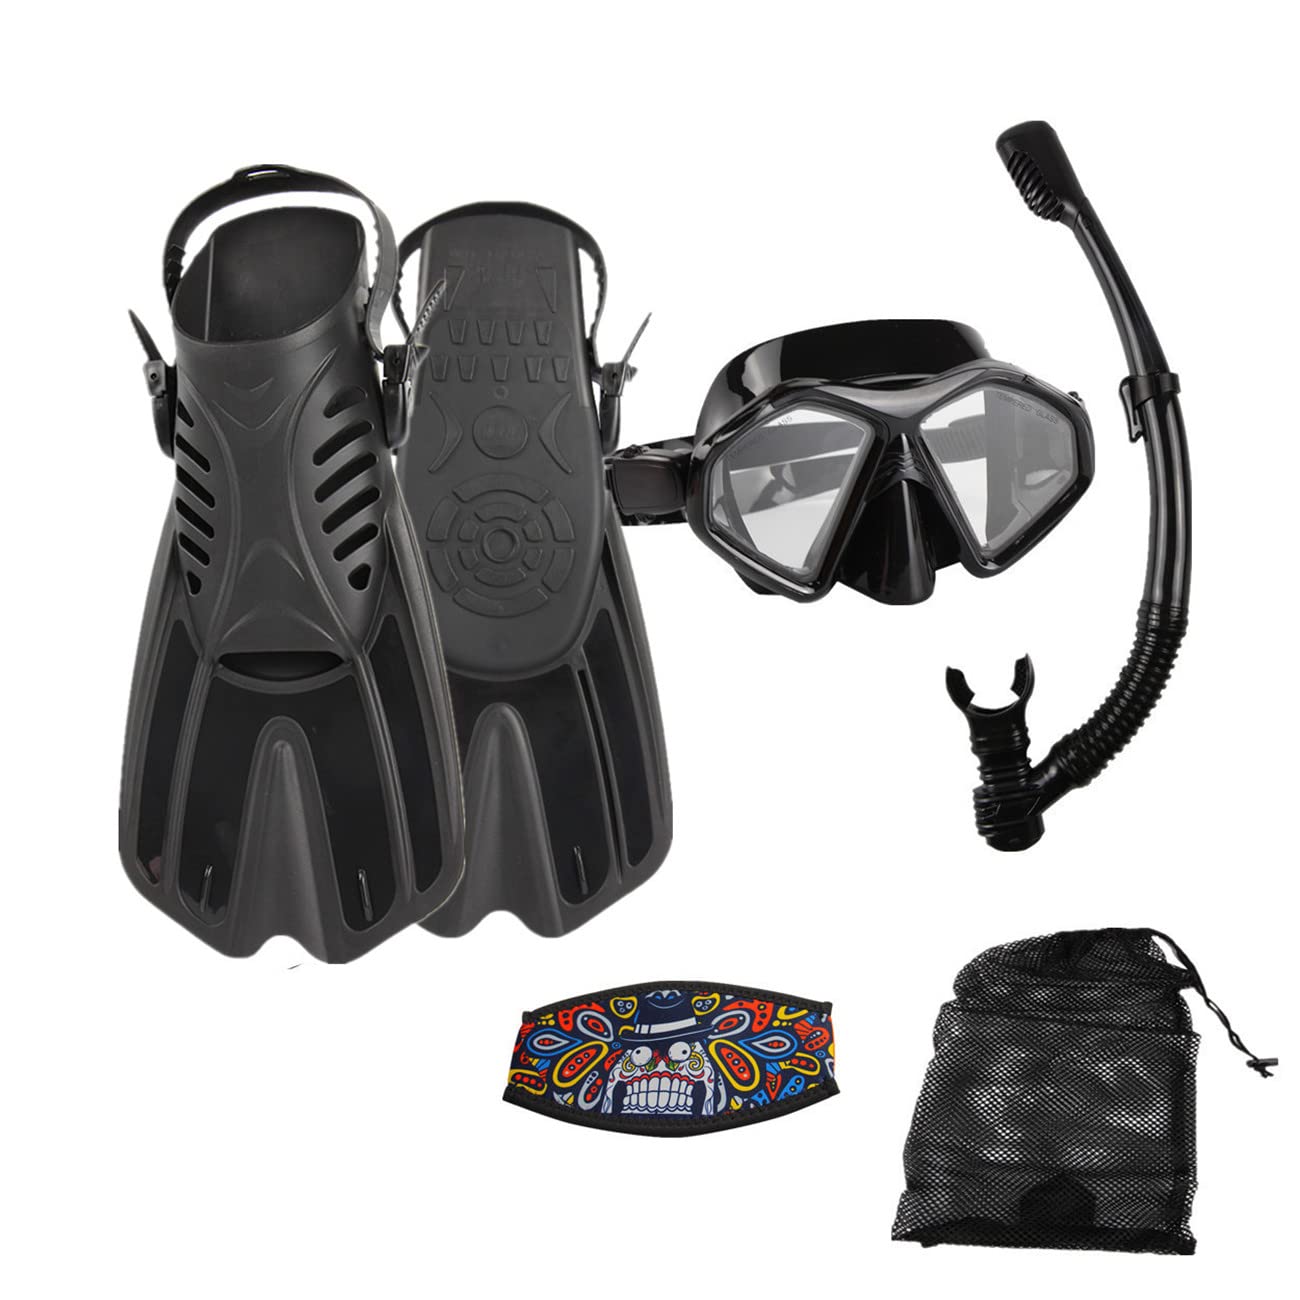 Beuchat X Contact 2 Mini Dive Mask – Black Silicone